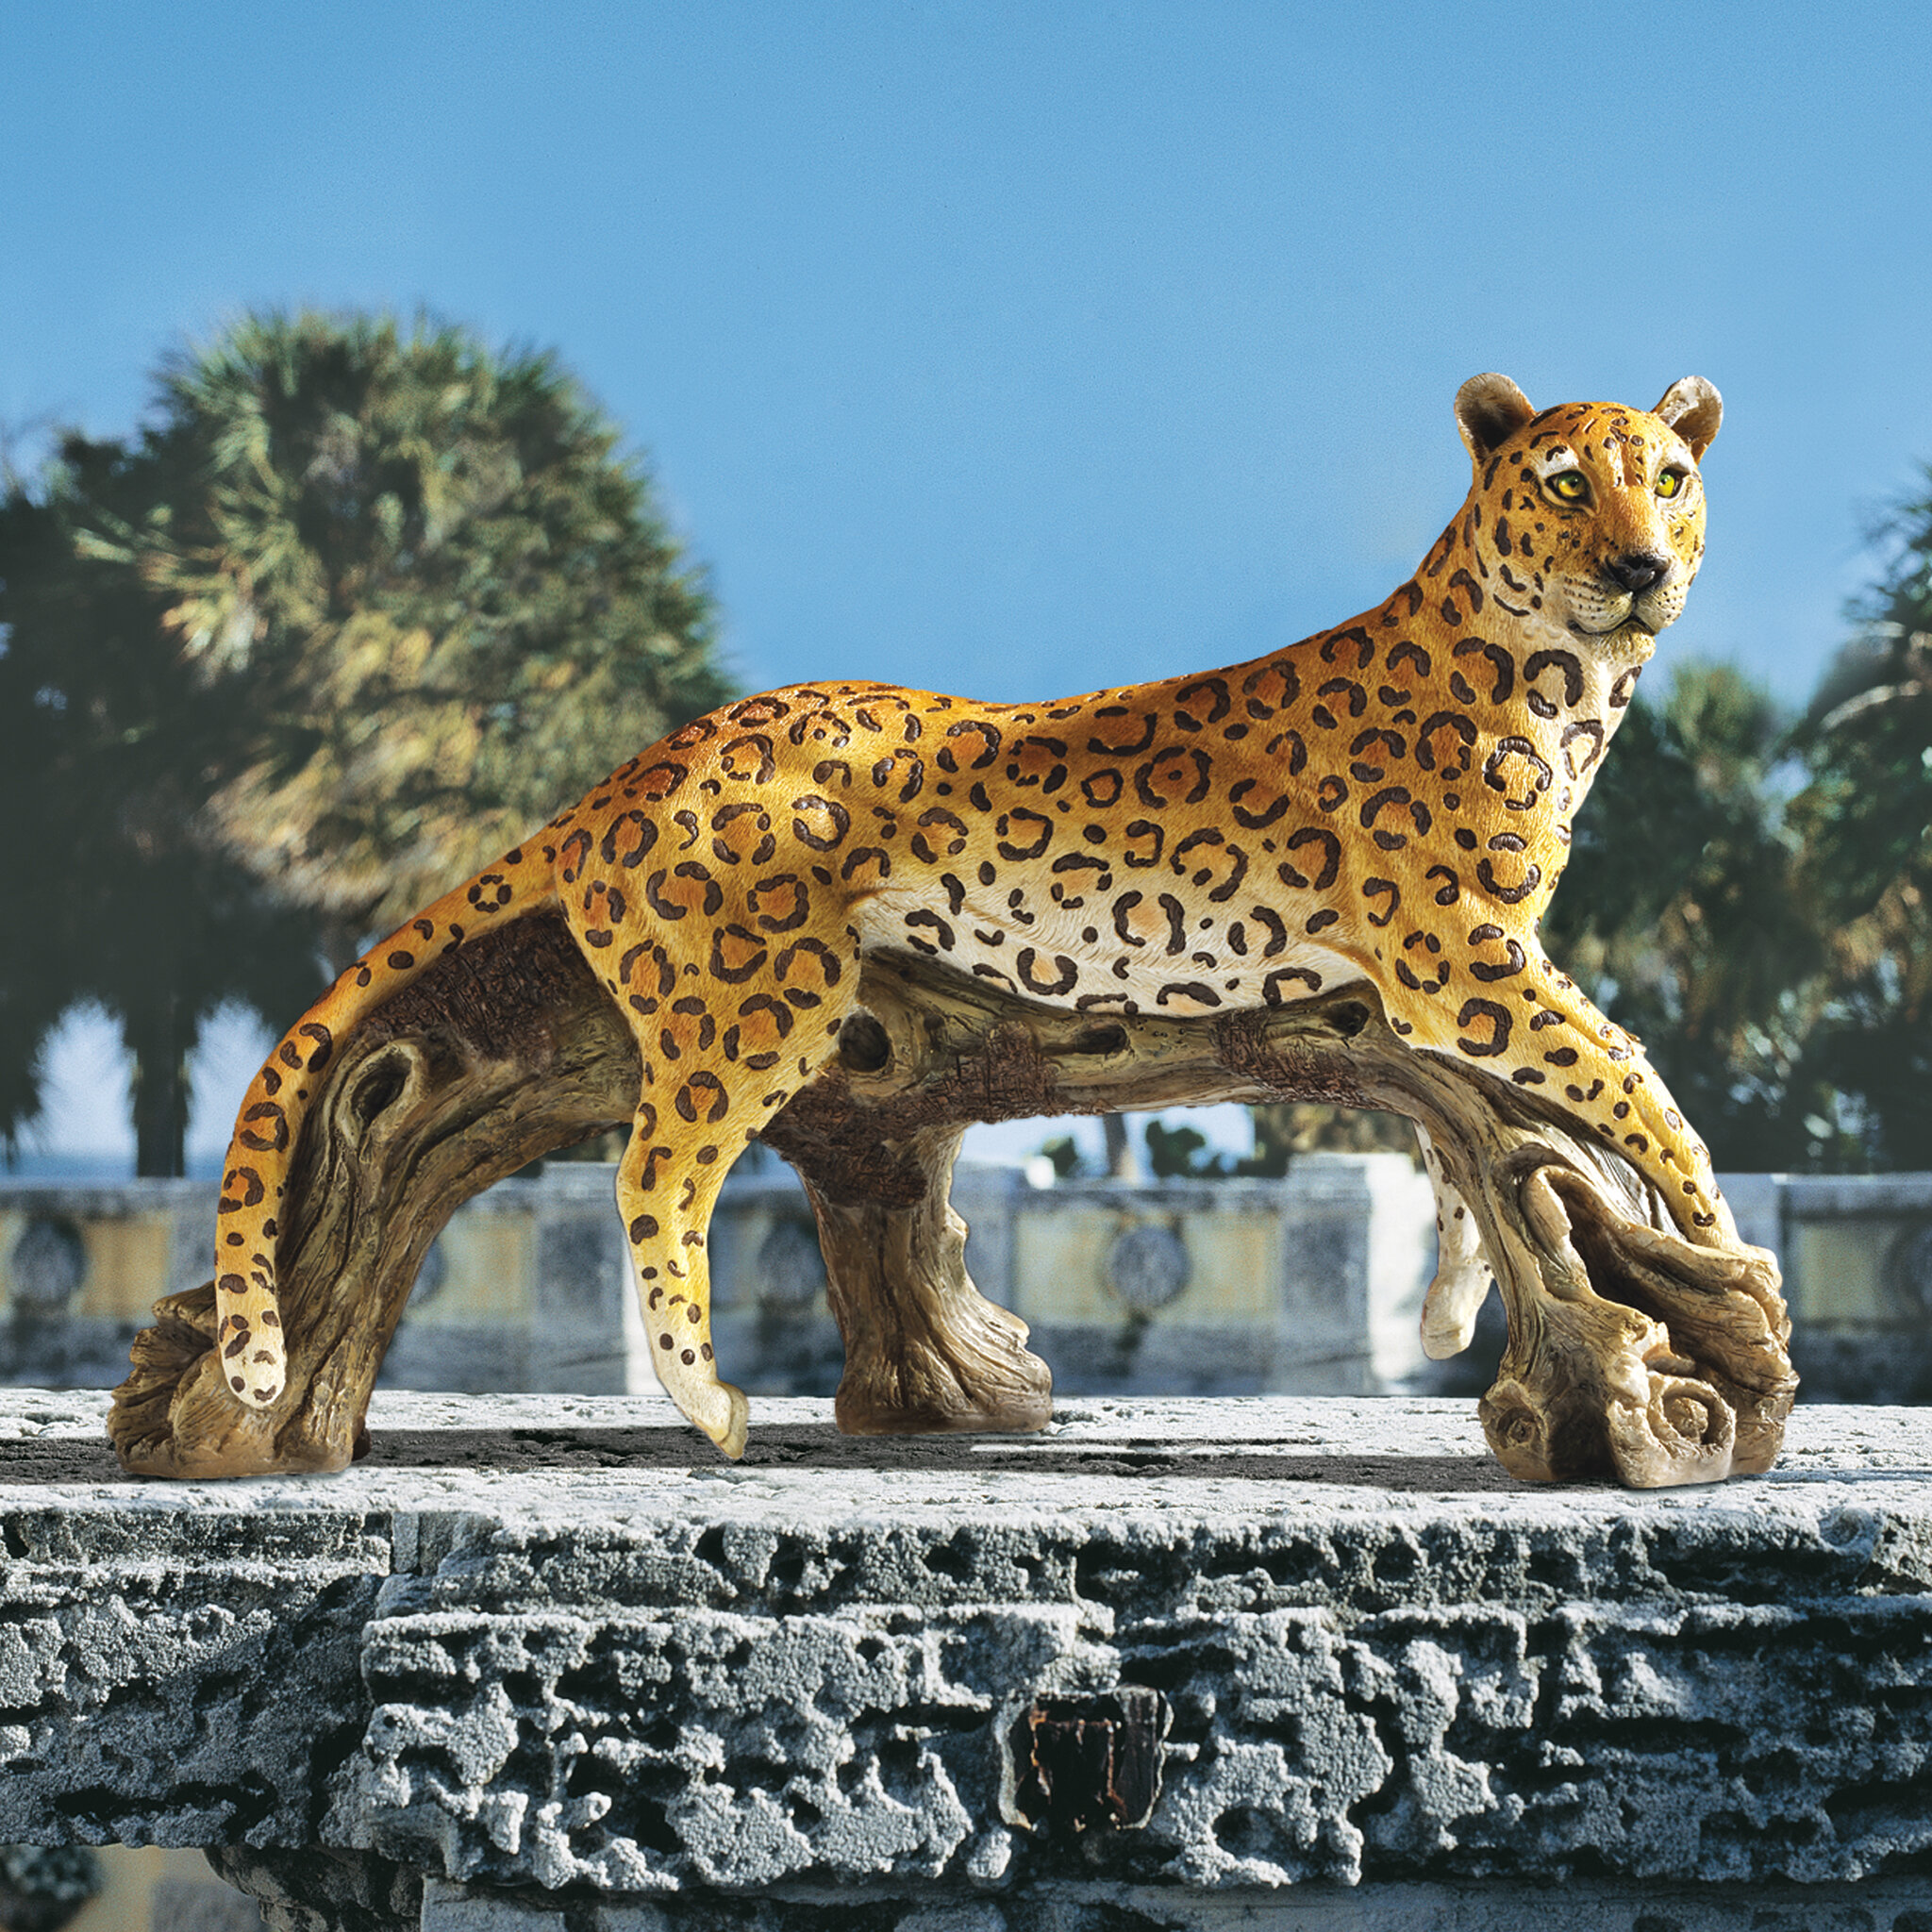 Polyresin Leopard Statue Resin Cheetah Figurine Animal Home Decor Gold :  : Patio, Lawn & Garden